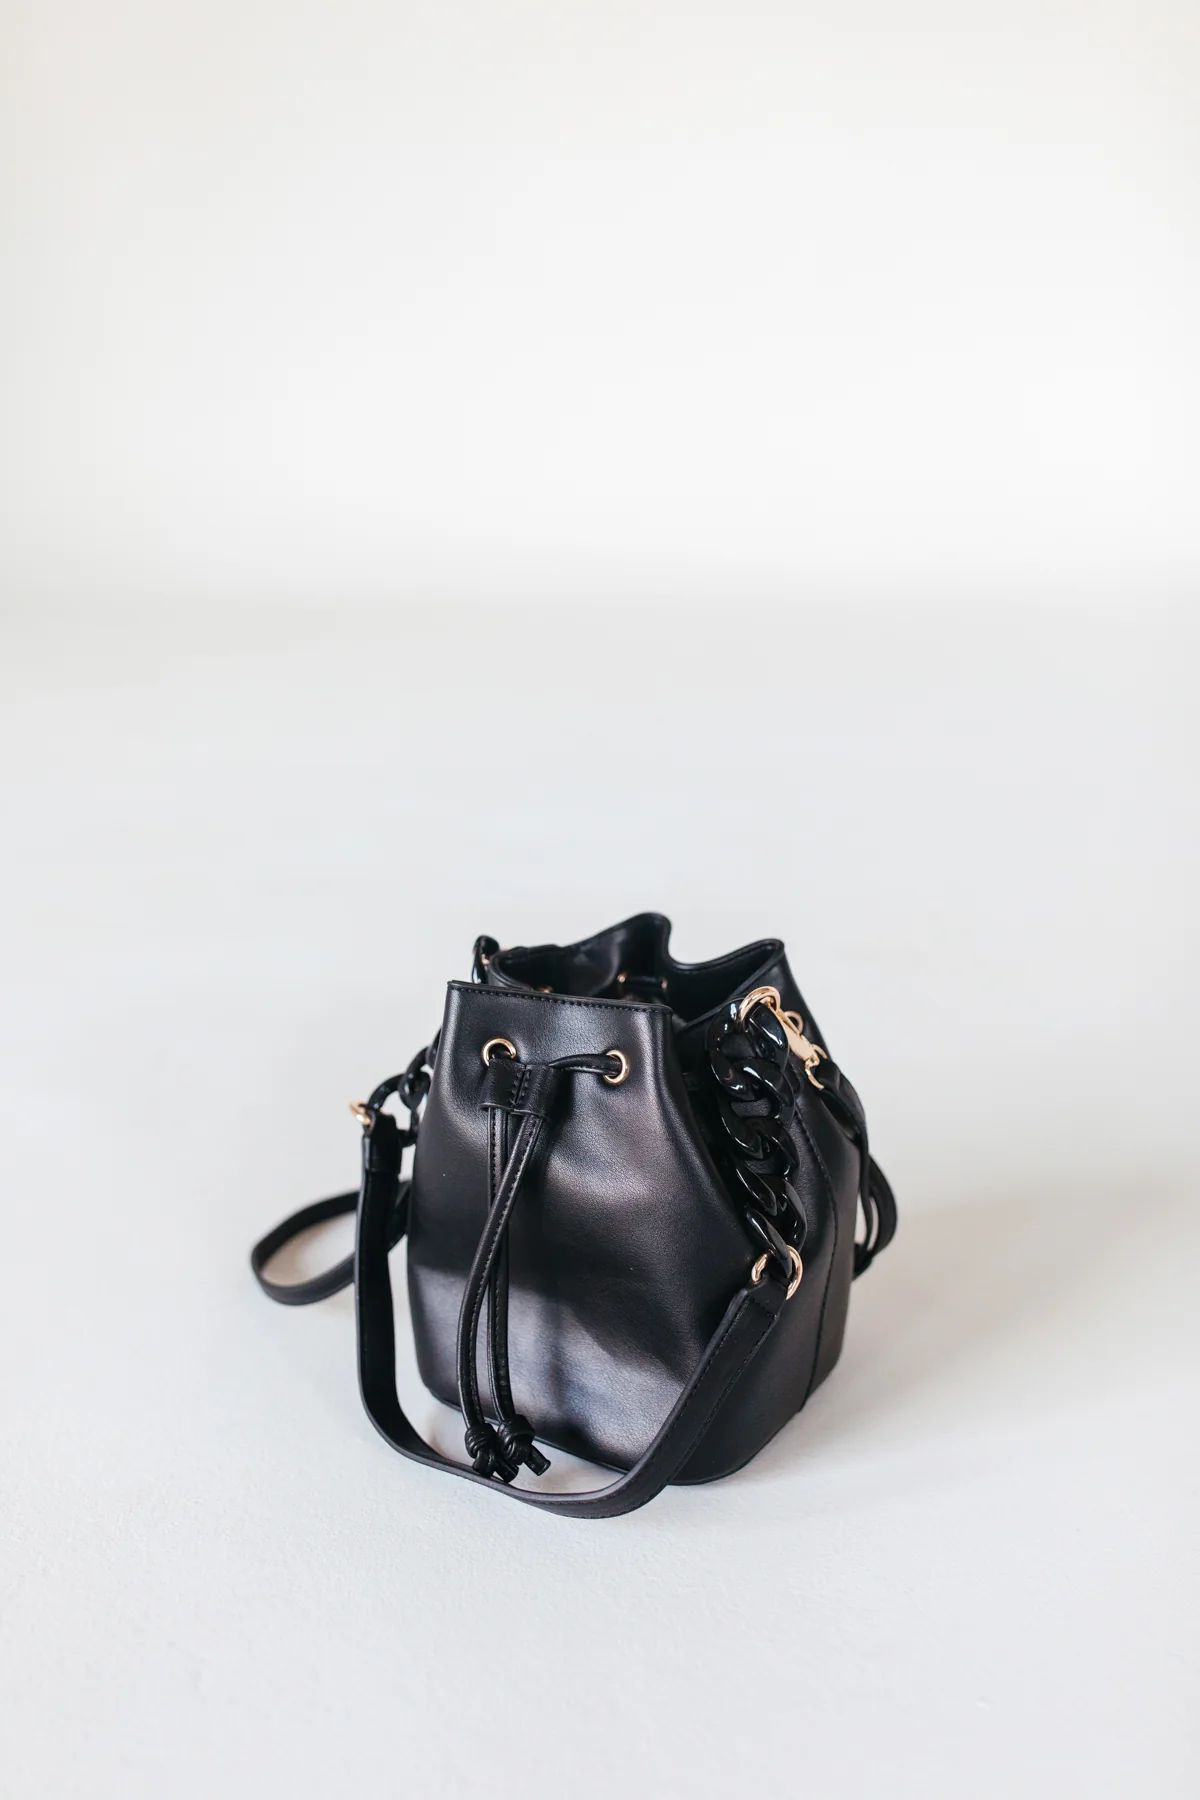 Becca Black Bucket Bag | The Post